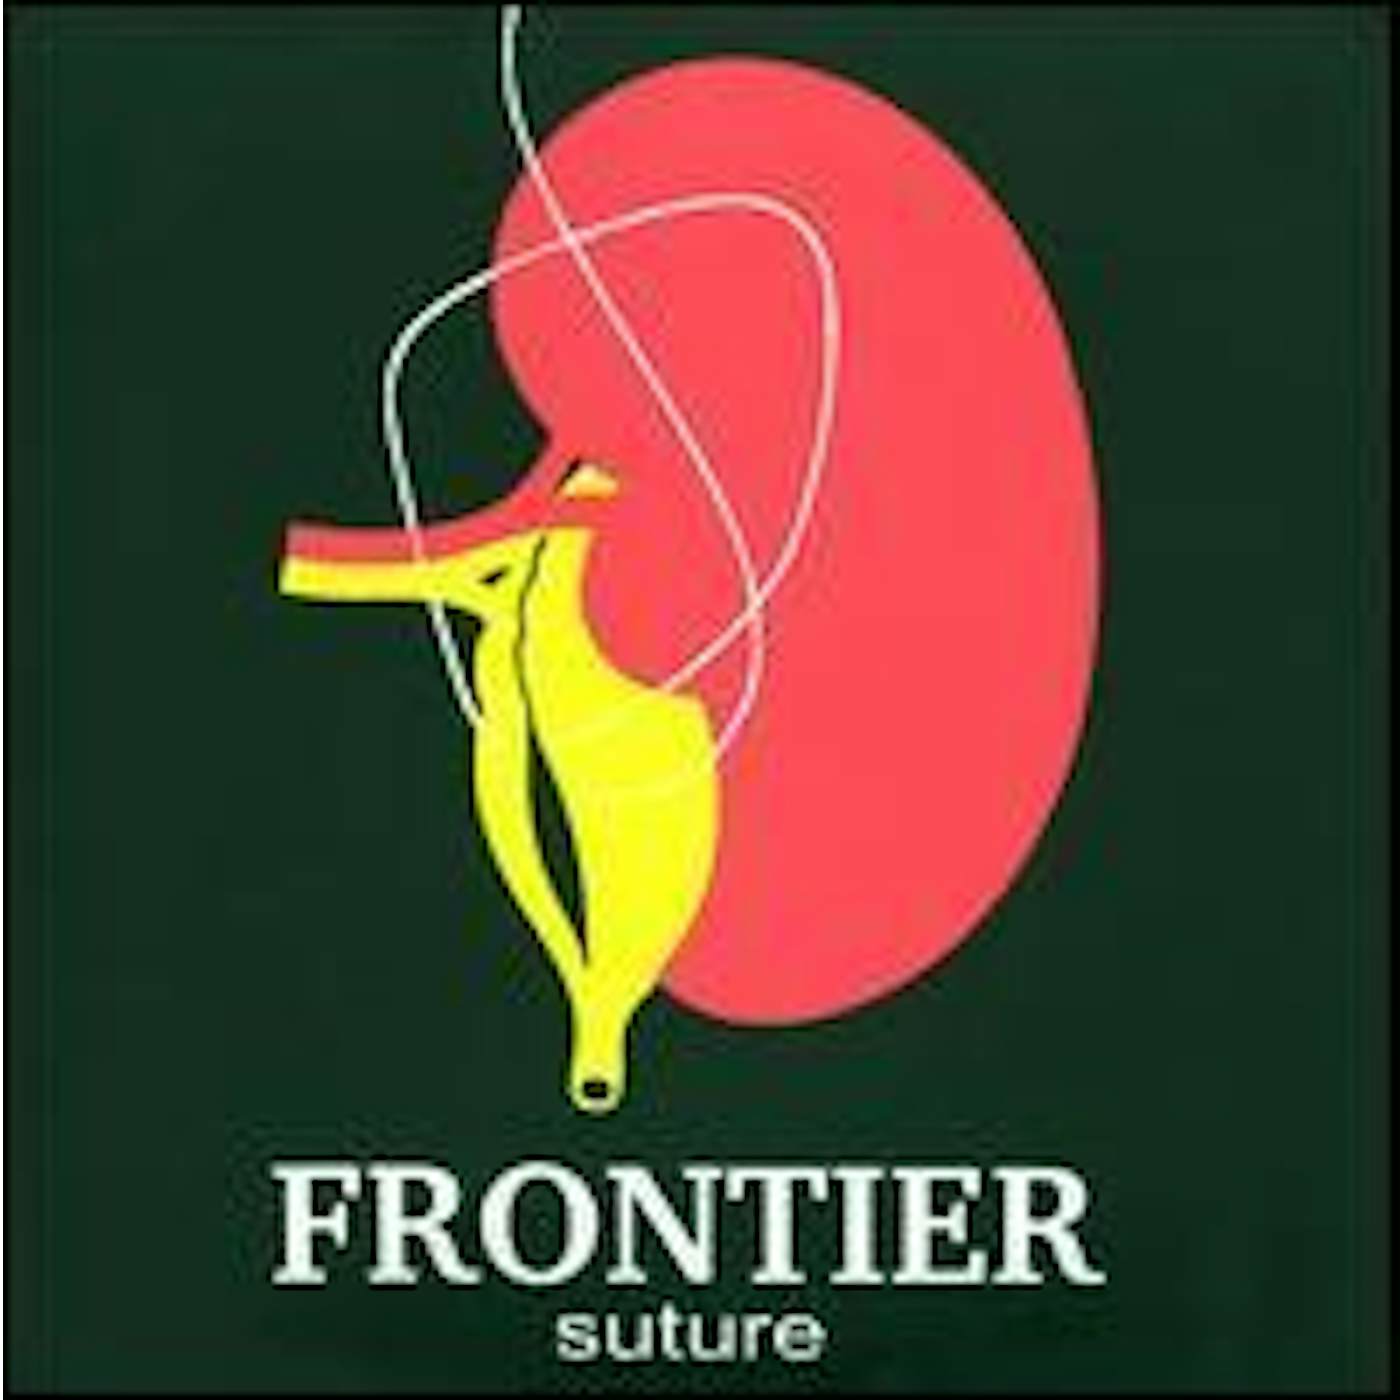 Frontier SUTURE Vinyl Record